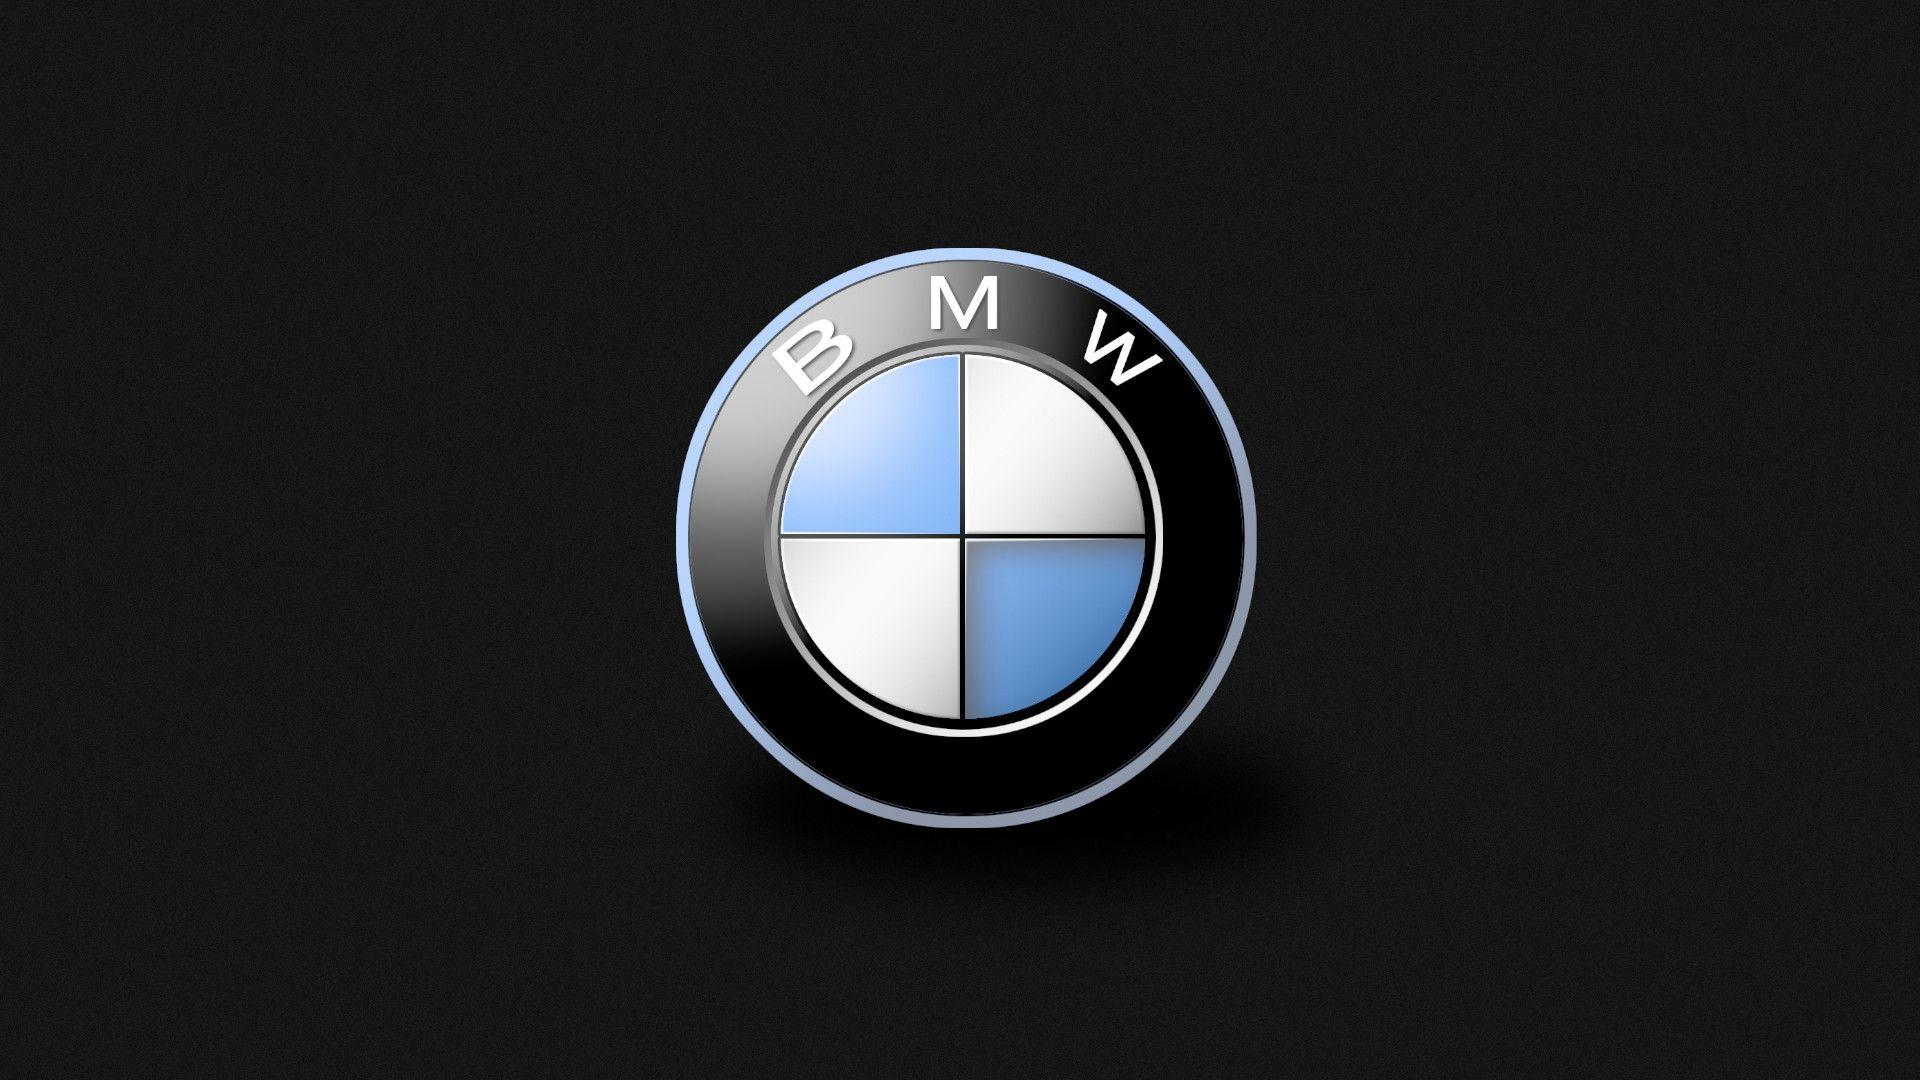 1080p HD BMW Logo Wallpaper. High Quality PC Dekstop Full HD